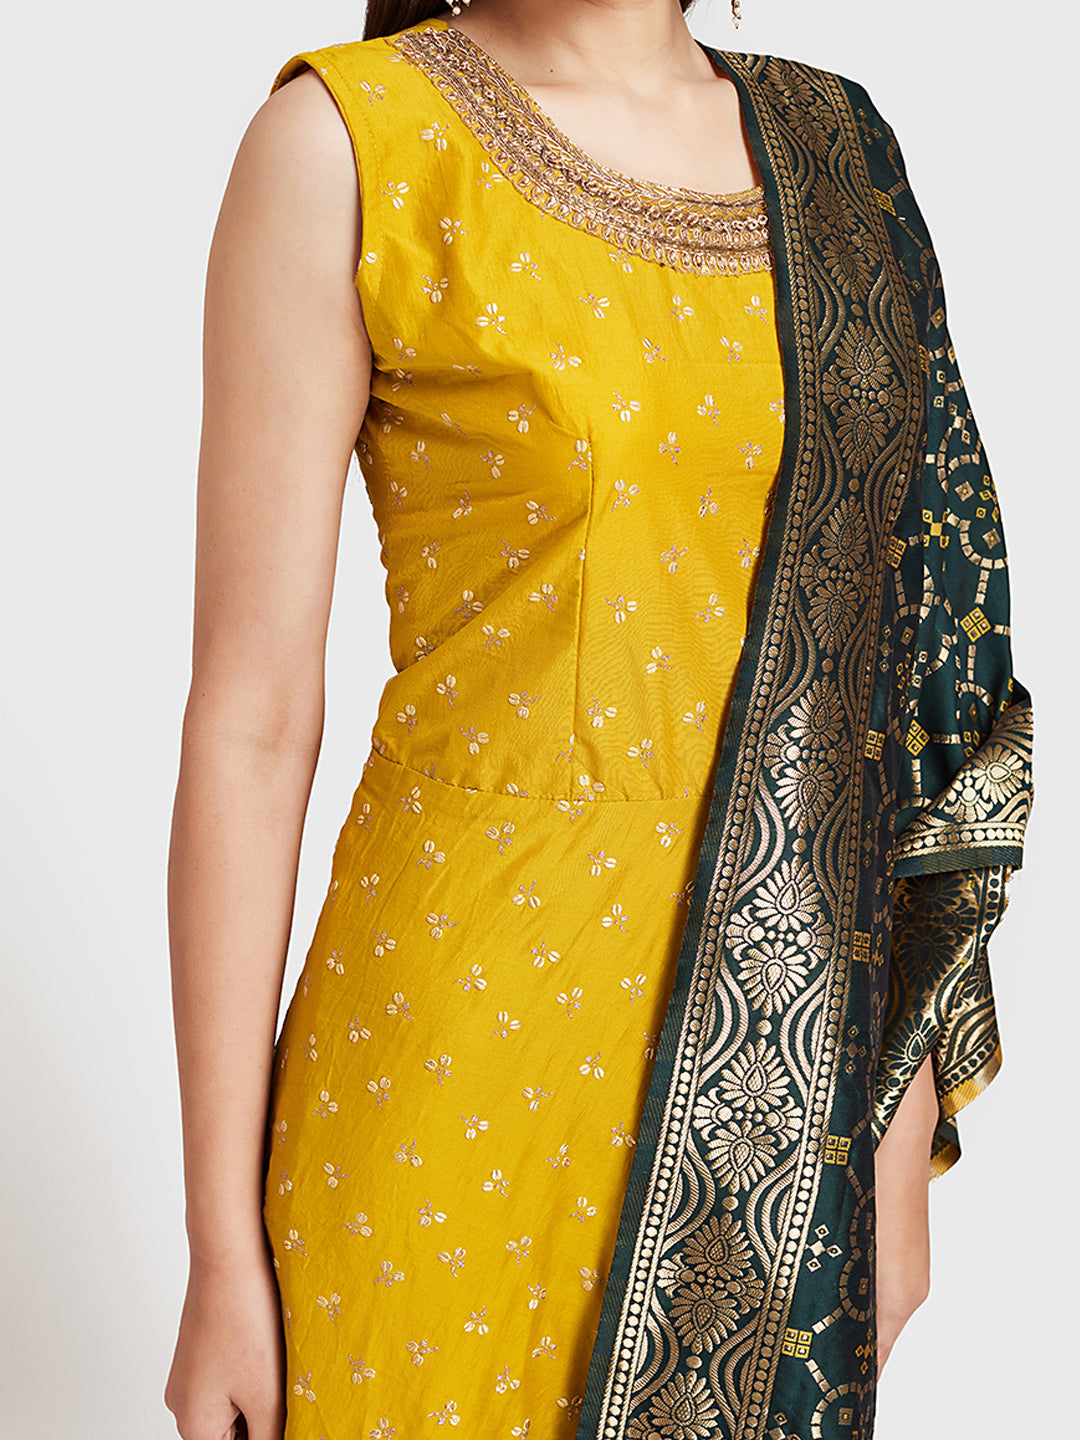 Neeru's Yellow & Green Embellished Anarkali Kurta With Dupatta